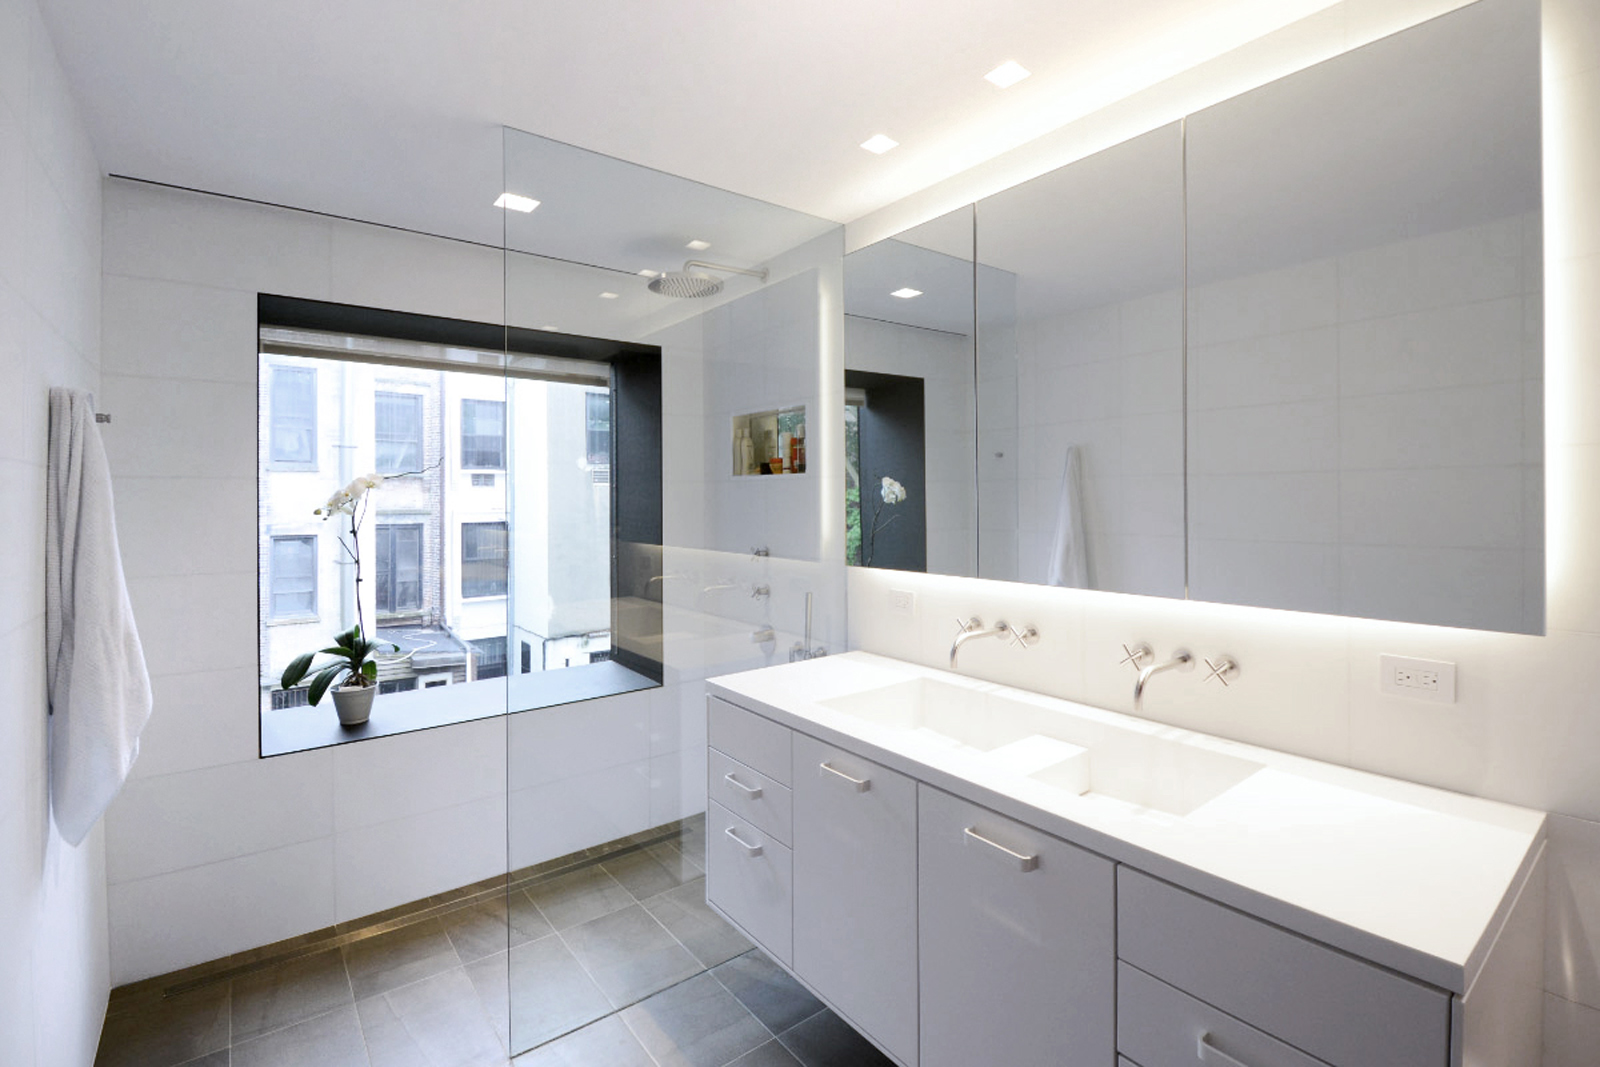 08-res4-resoltuion-4-architecture-modern-apartment-residential-brownstone-renovation-bathroom-2.jpg